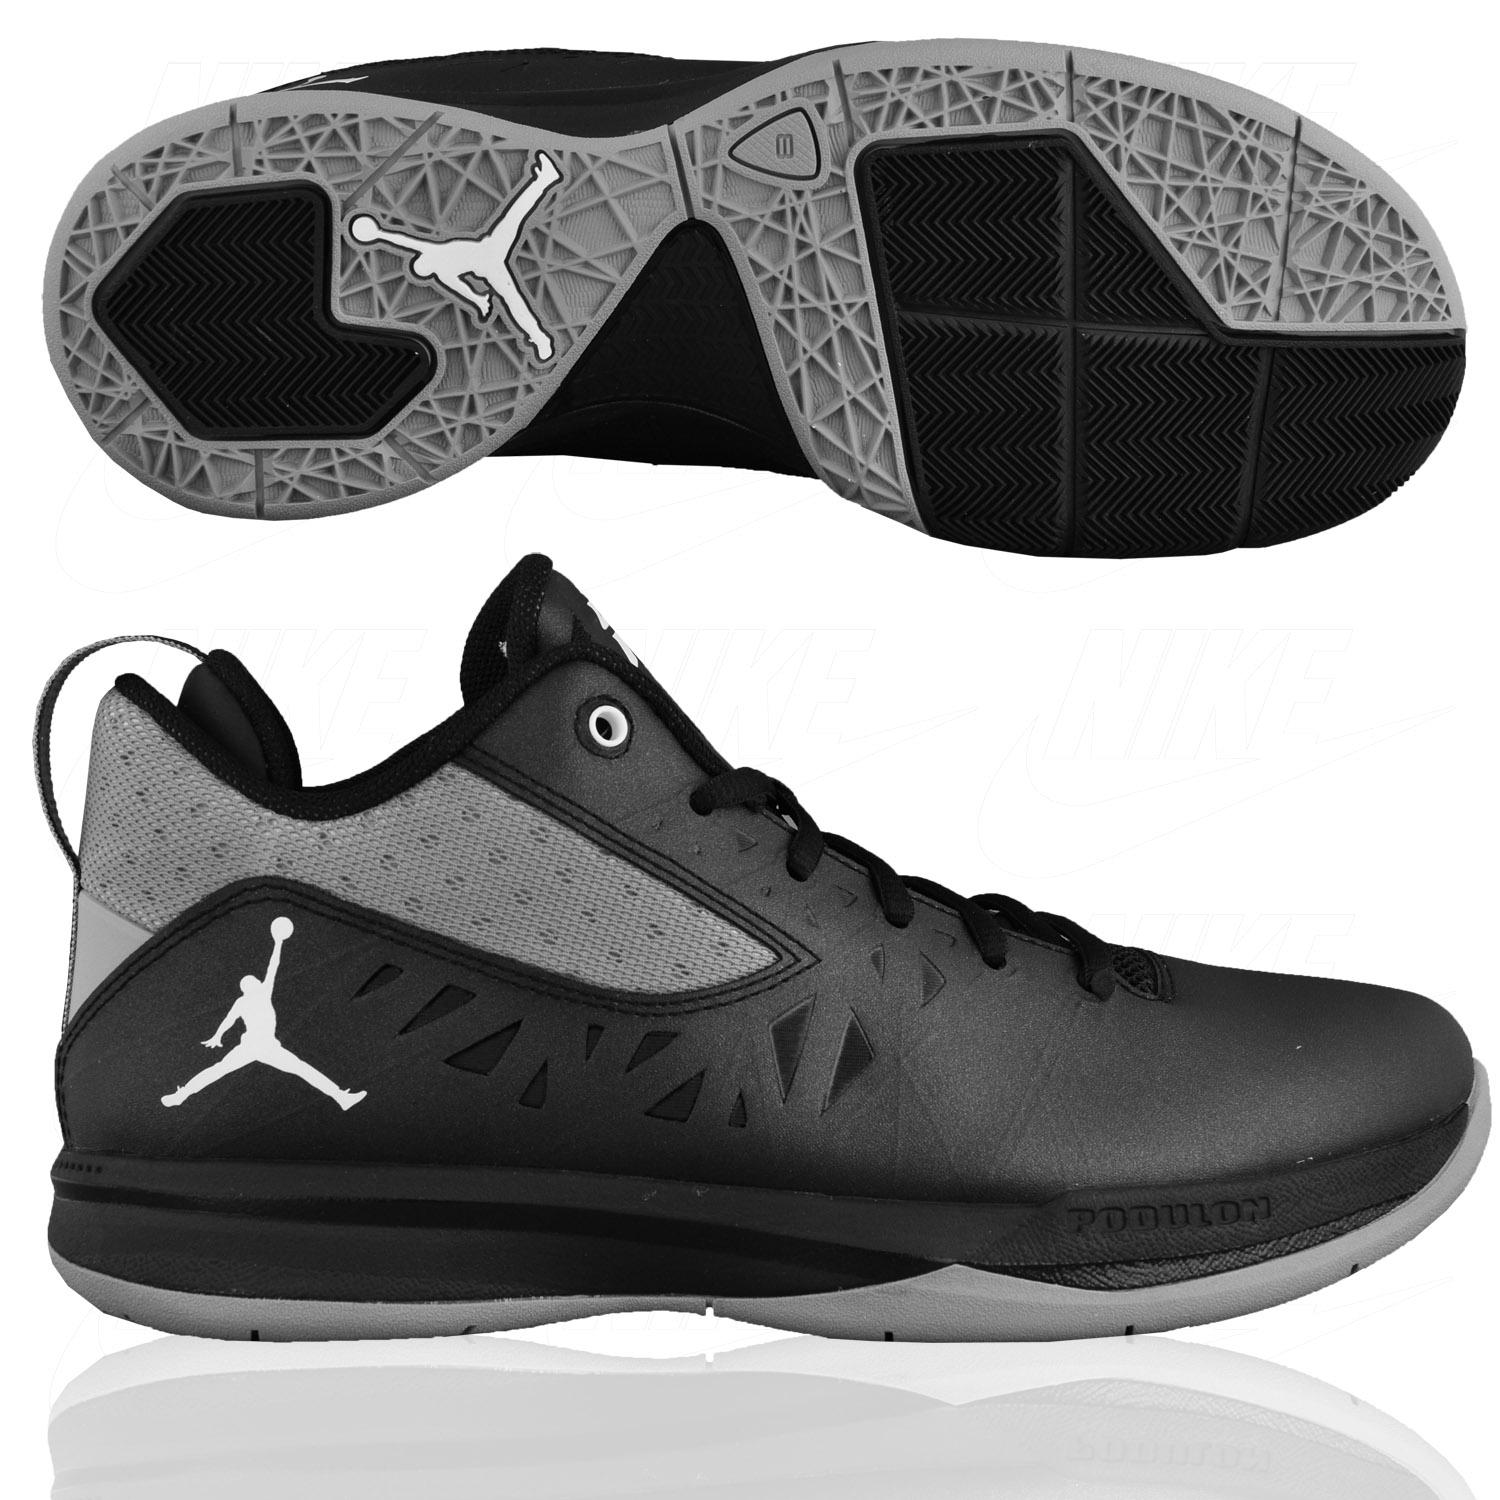 Foto Nike Jordan Cp3.v Zapatillas De Baloncesto Negro foto 29611